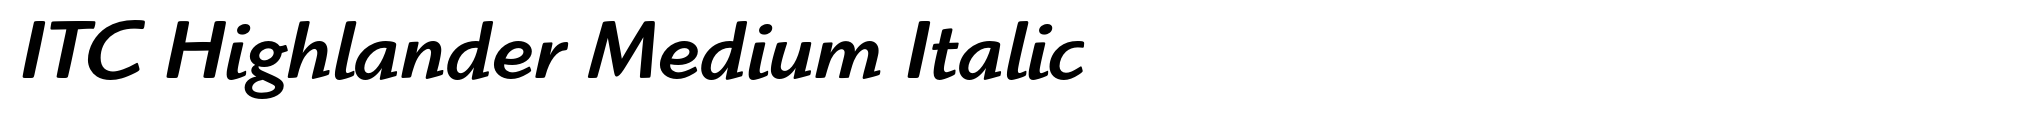 ITC Highlander Medium Italic image